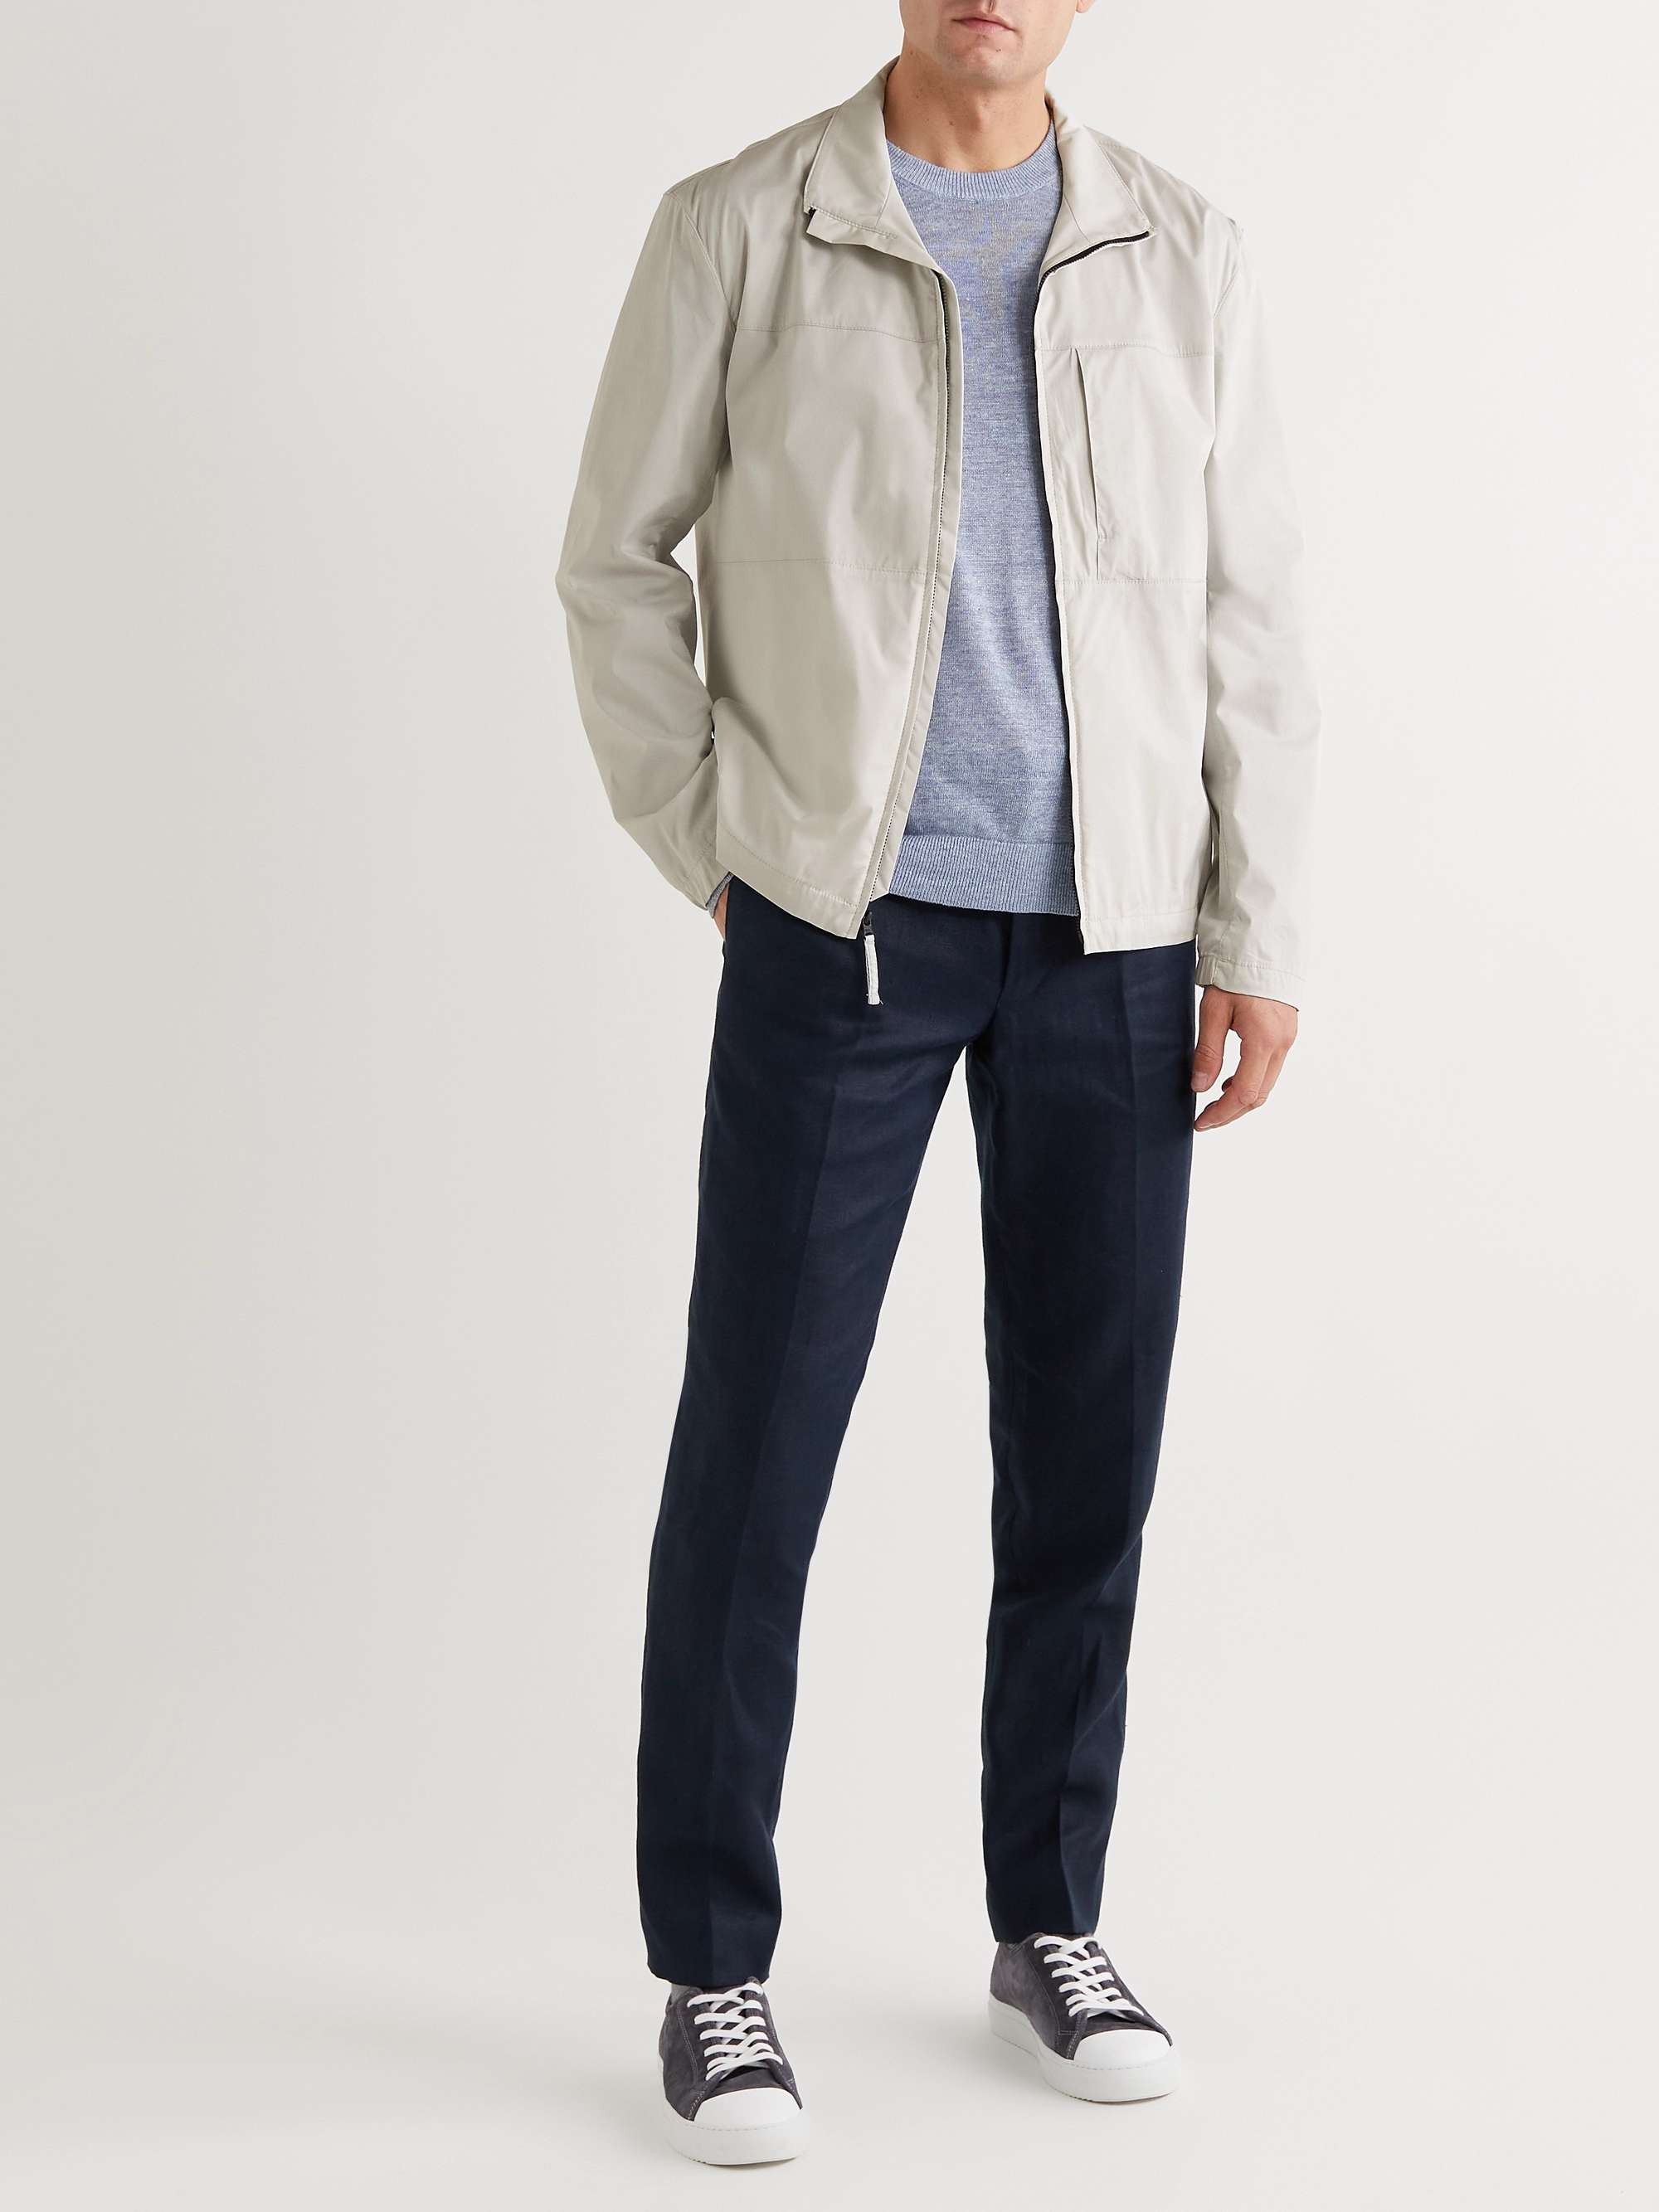 CLUB MONACO Performance Cotton-Blend Jacket for Men | MR PORTER